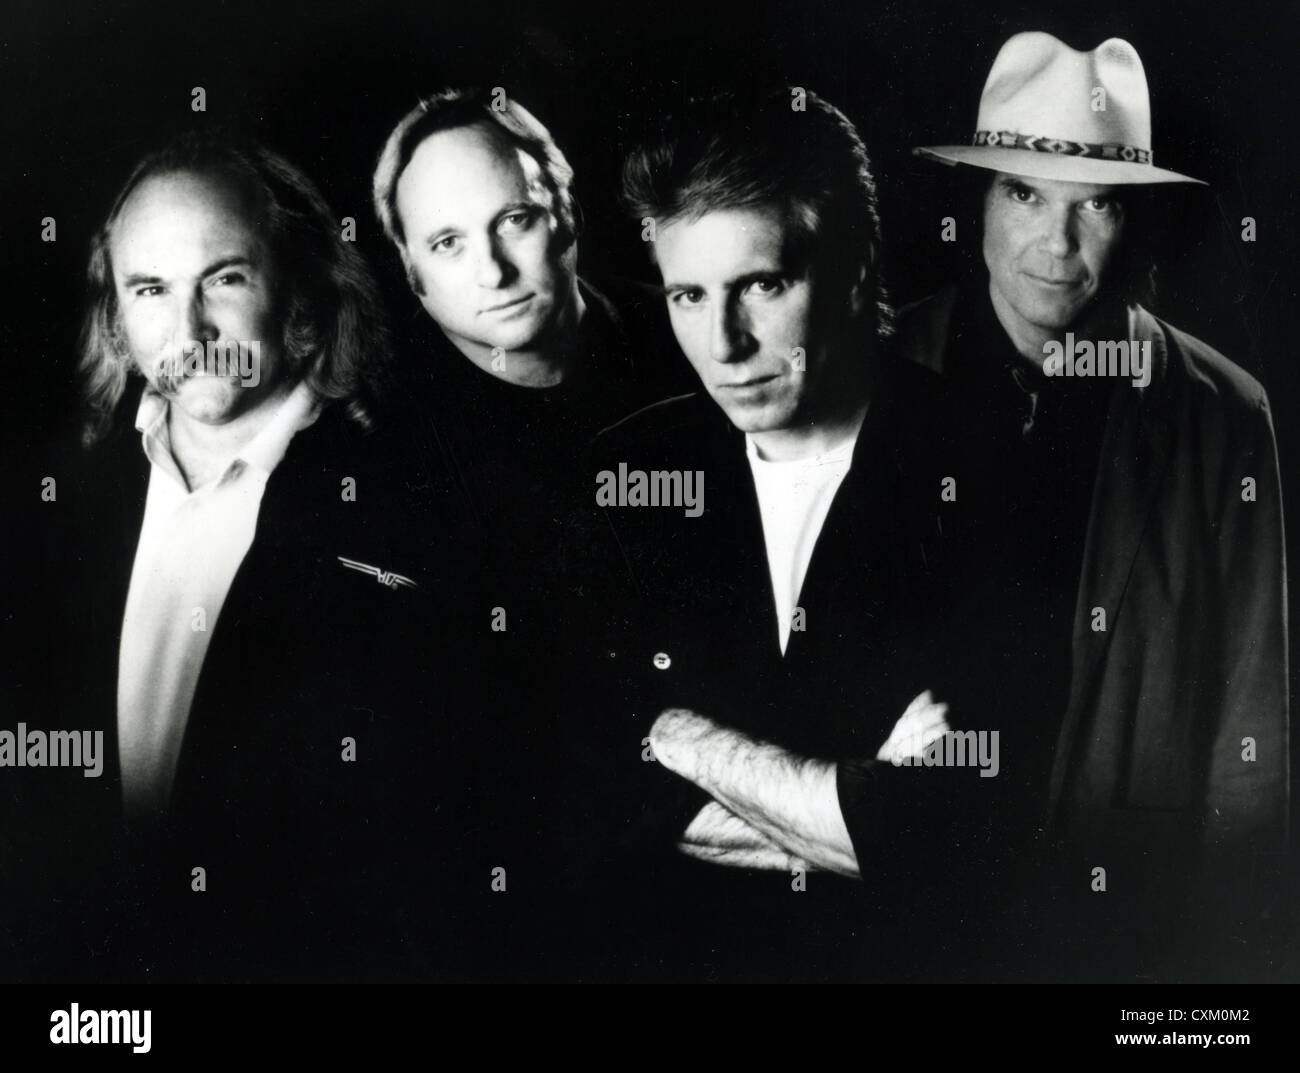 CROSBY, Stills, Nash & Young. Promo foto di gruppo rock circa 1995. Da l: Dave Crosby, Stephen Stills, Graham Nash, Neil Young Foto Stock